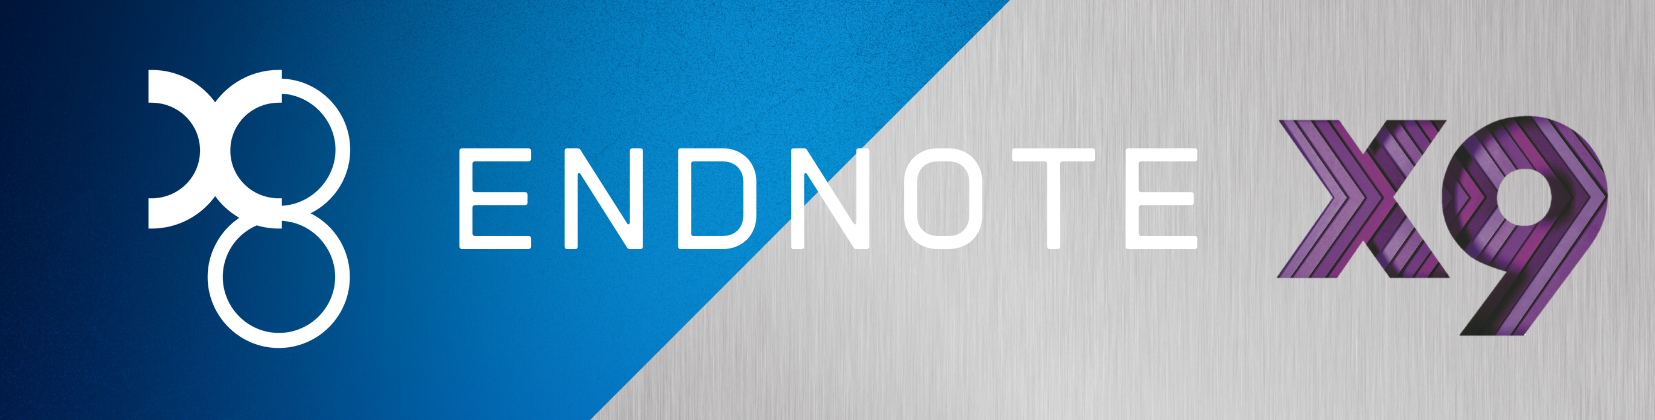 Endnote Software Banner